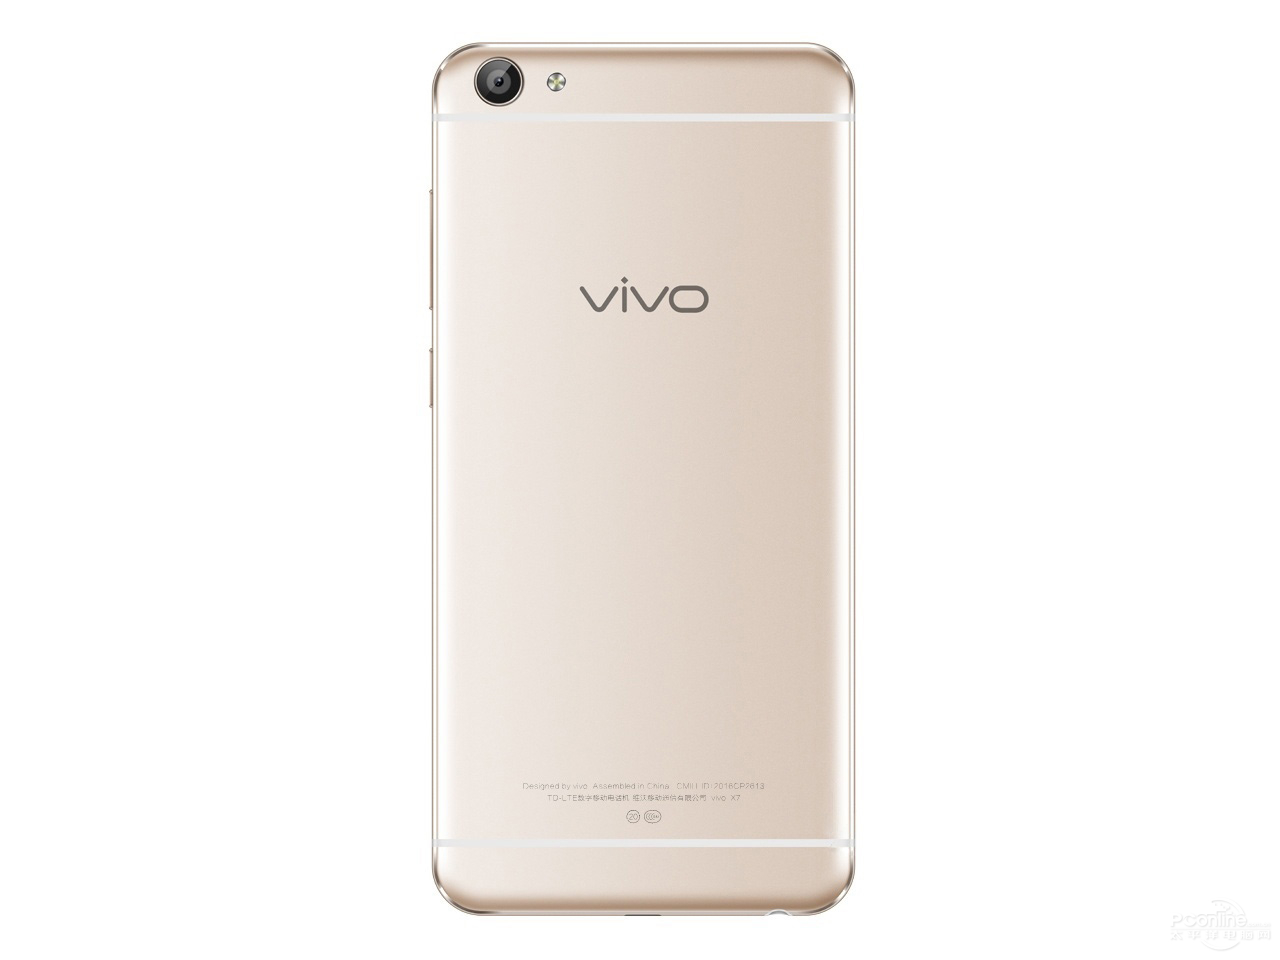 Vivo X7 Price Reviews, Specifications